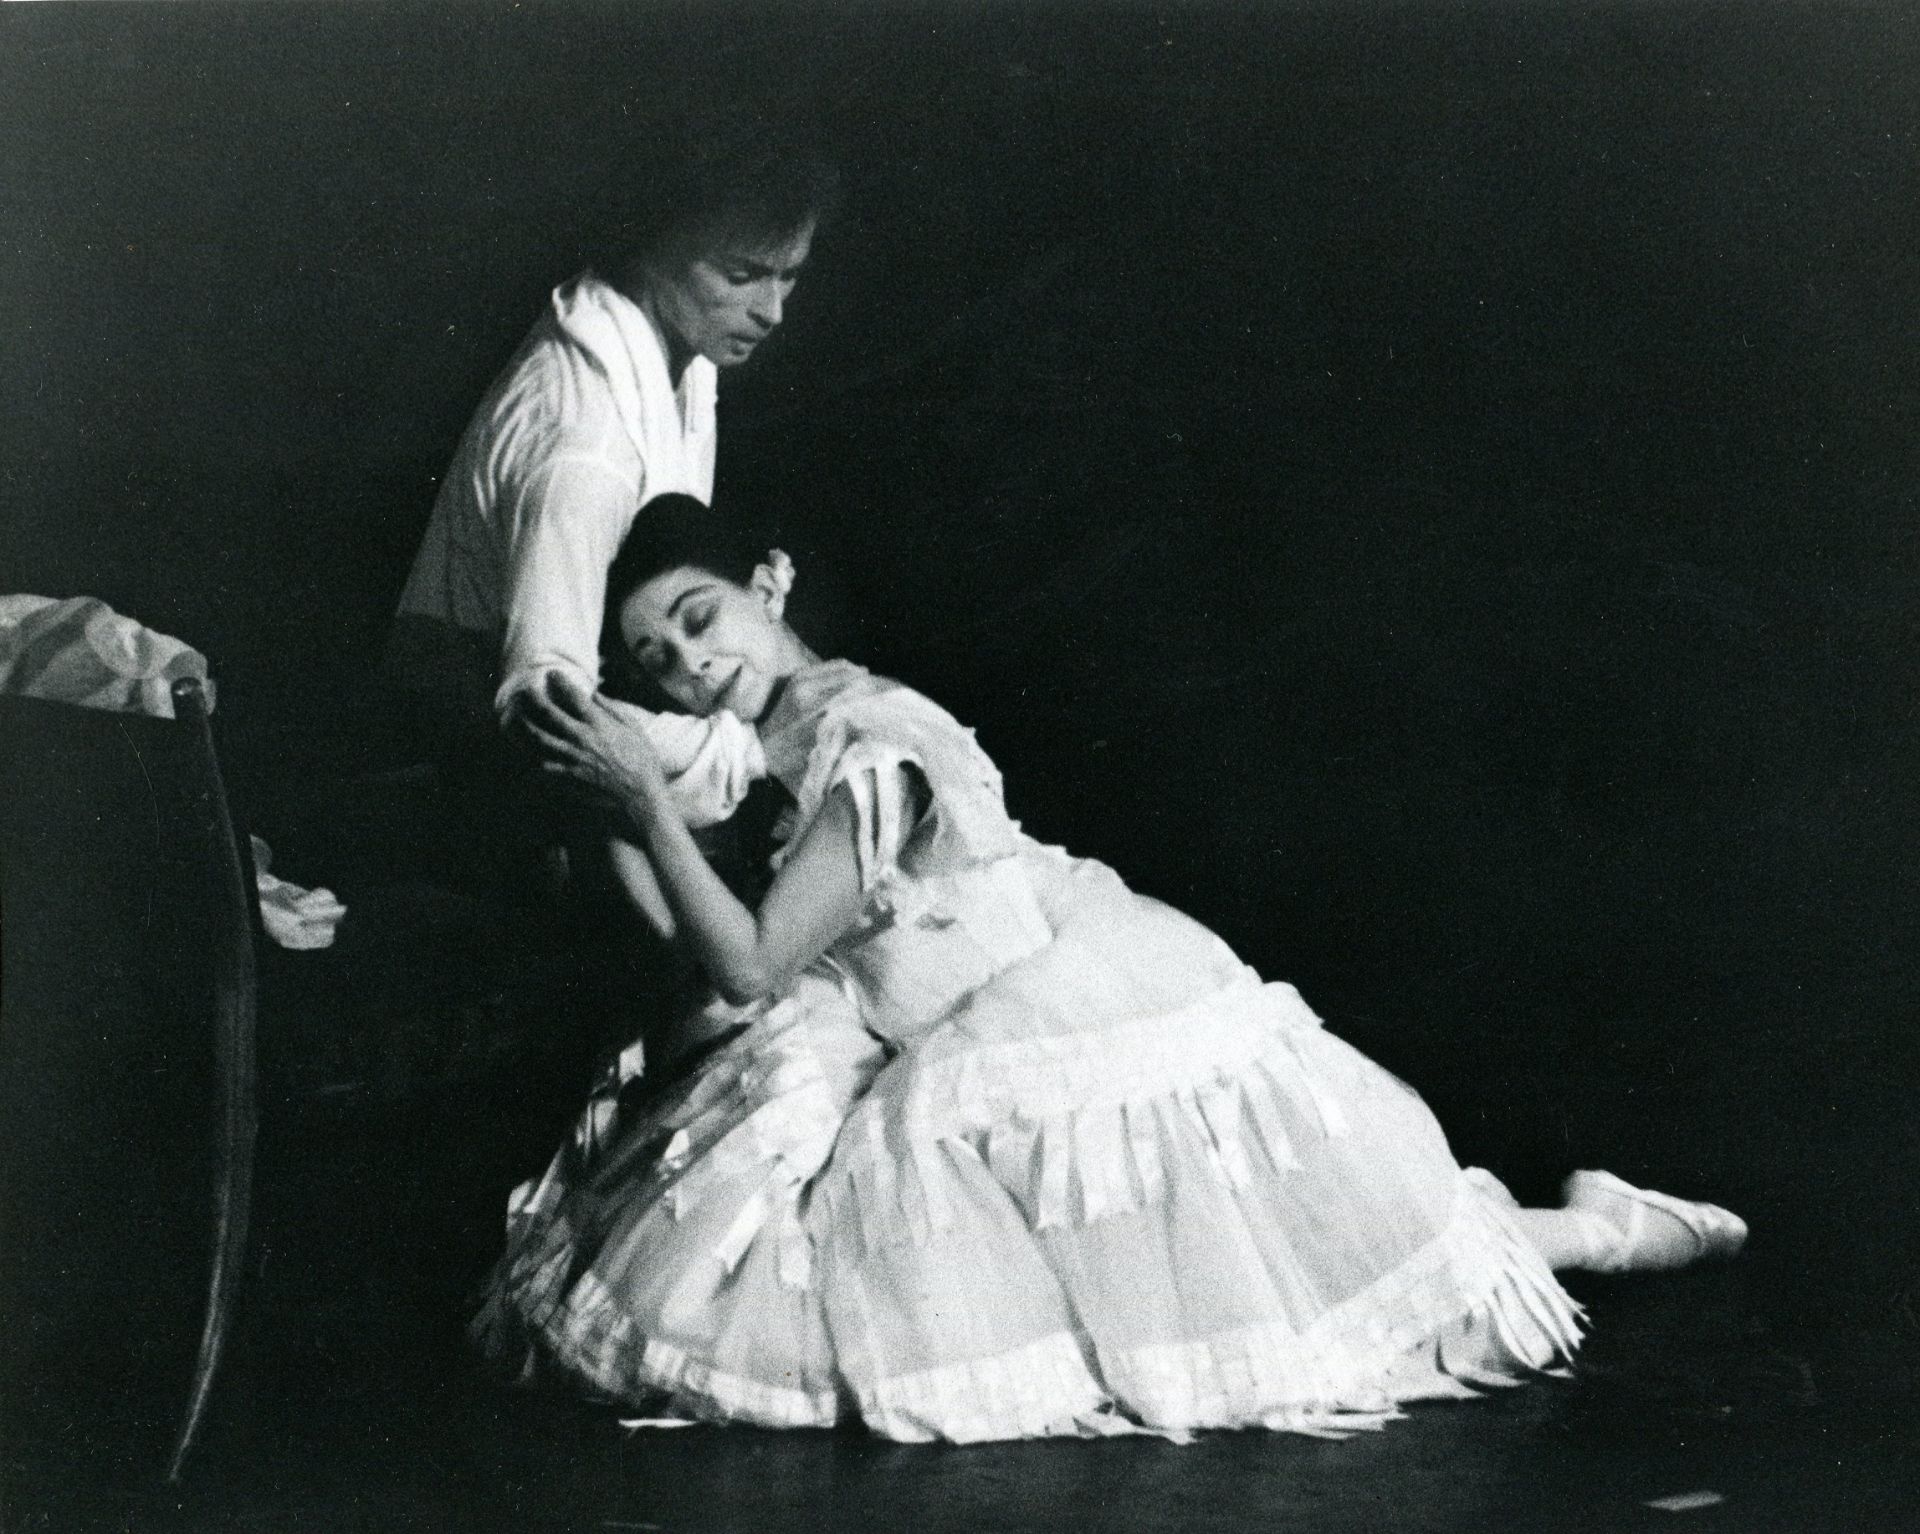 [FONTEYN & NUREYEV]: [FONTEYN MARGOT] (1919-1991) English ballerina & [NUREYEV RUDOLF] (1938-1993) - Image 14 of 17